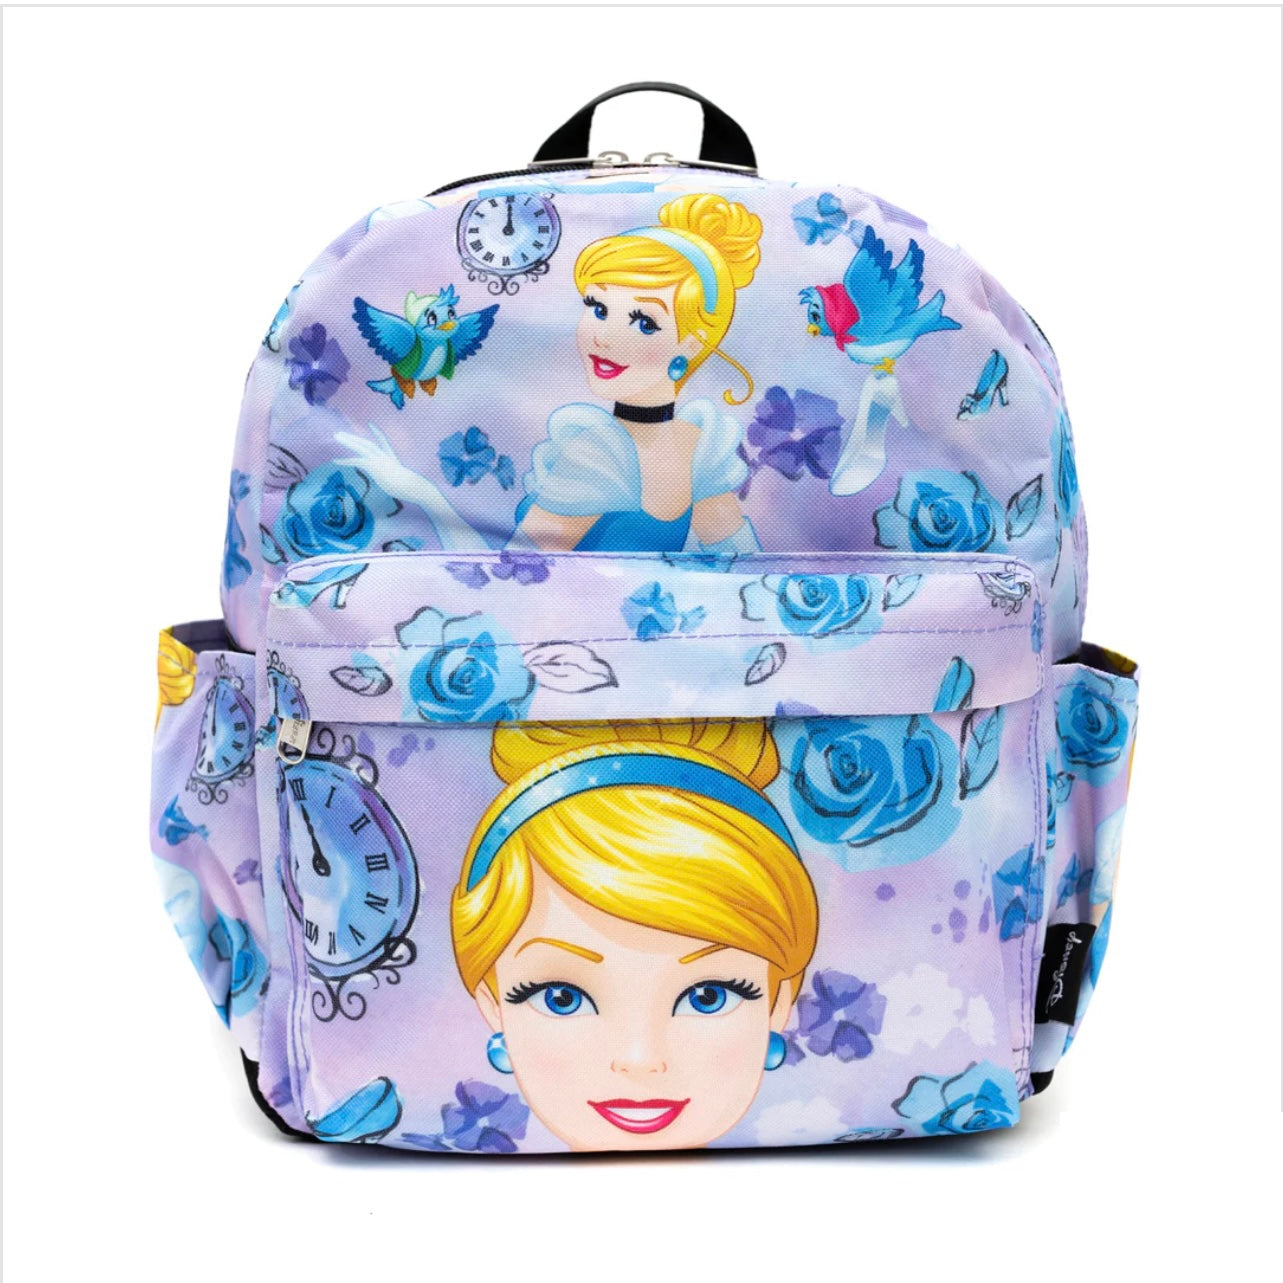 Cinderella Fabric Backpack